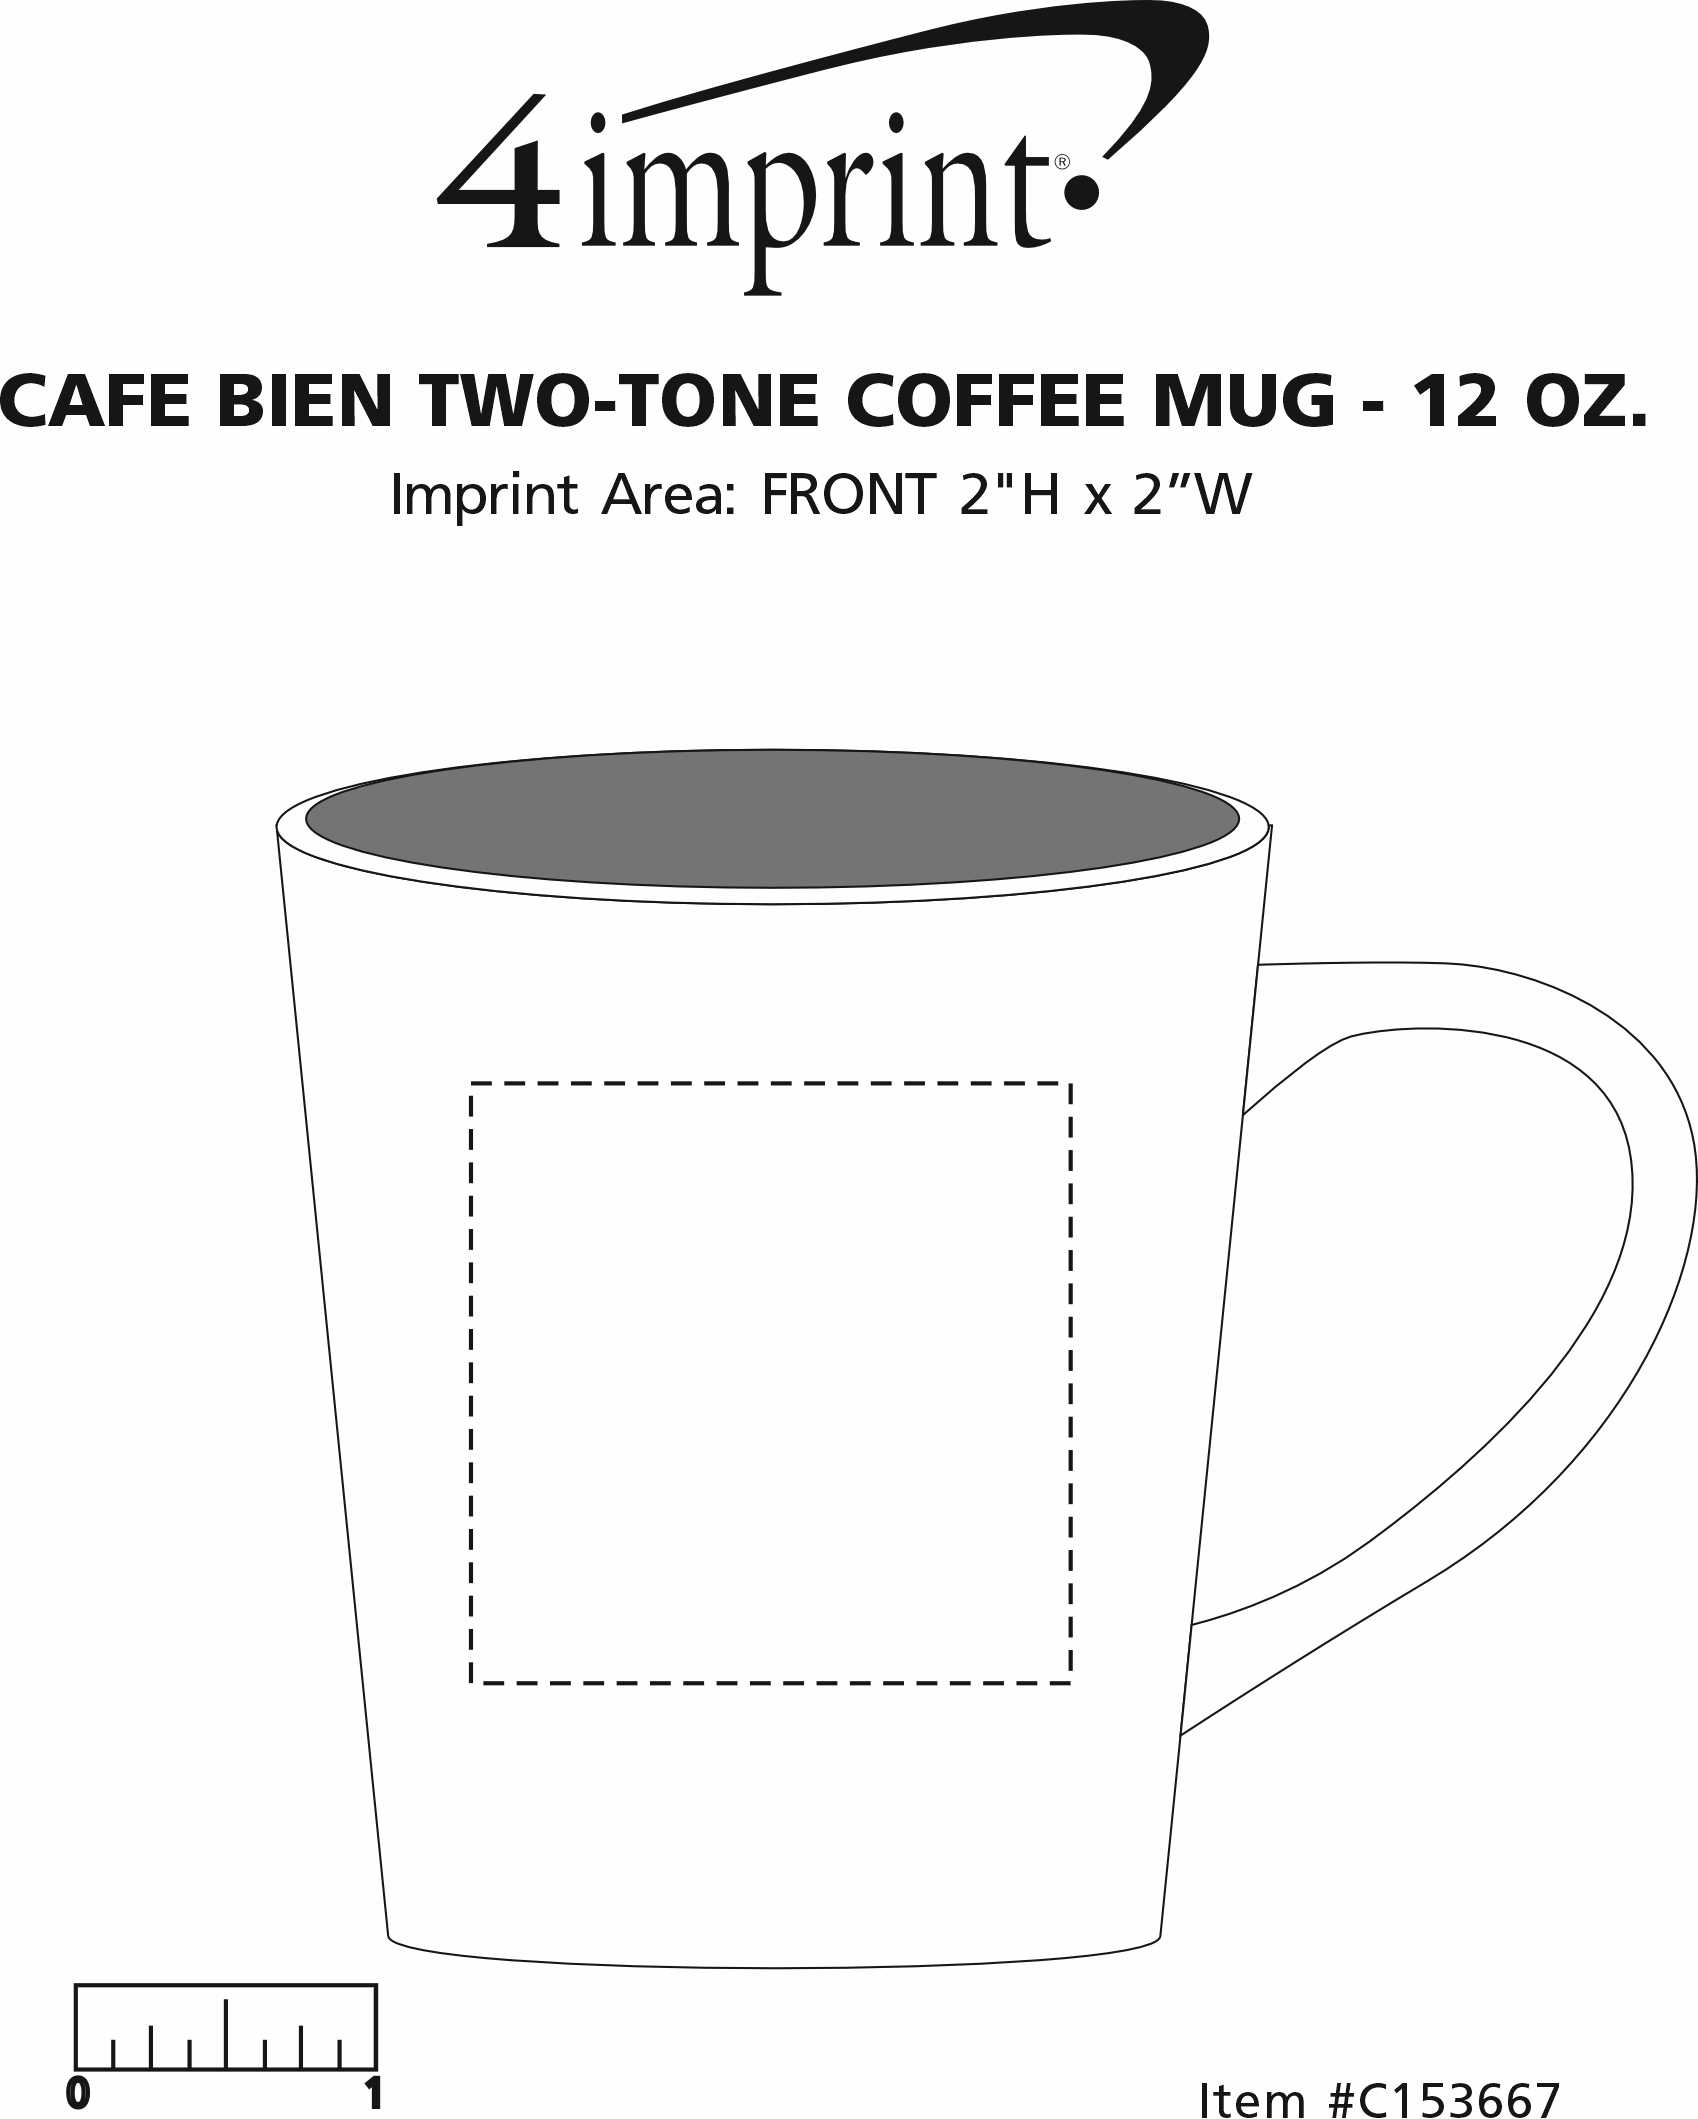 Imprint Area of Cafe Bien Two-Tone Coffee Mug - 12 oz.